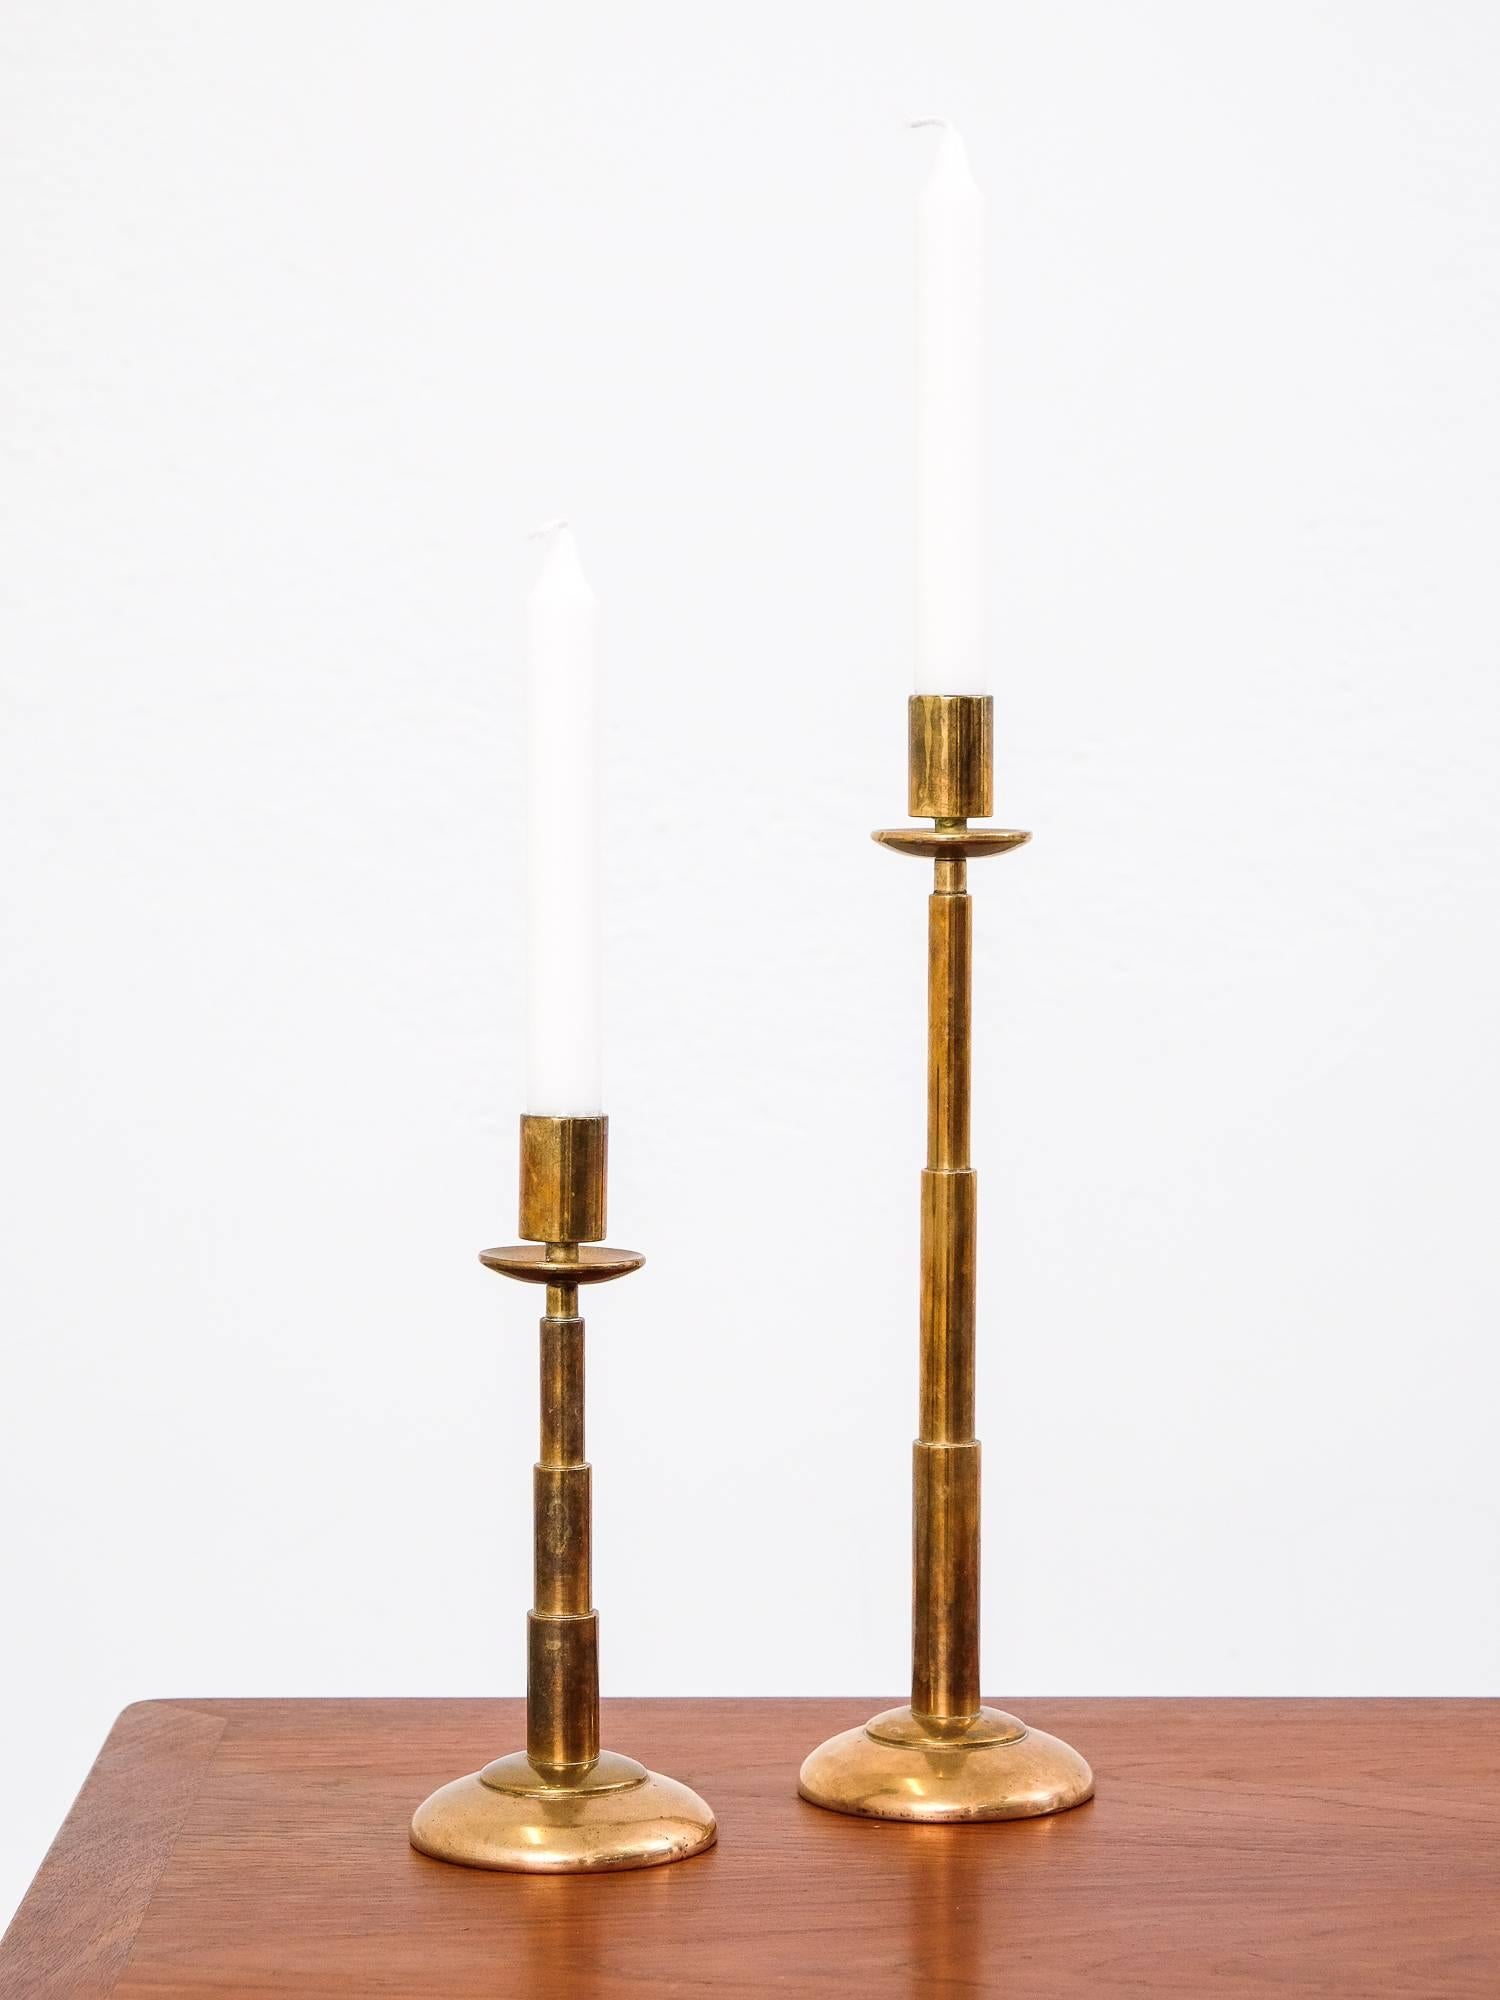 Nice, heavy brass candlesticks from Denmark. No markings.

Taller ones height is 33.5 cm
Shorter one 21.5 cm.